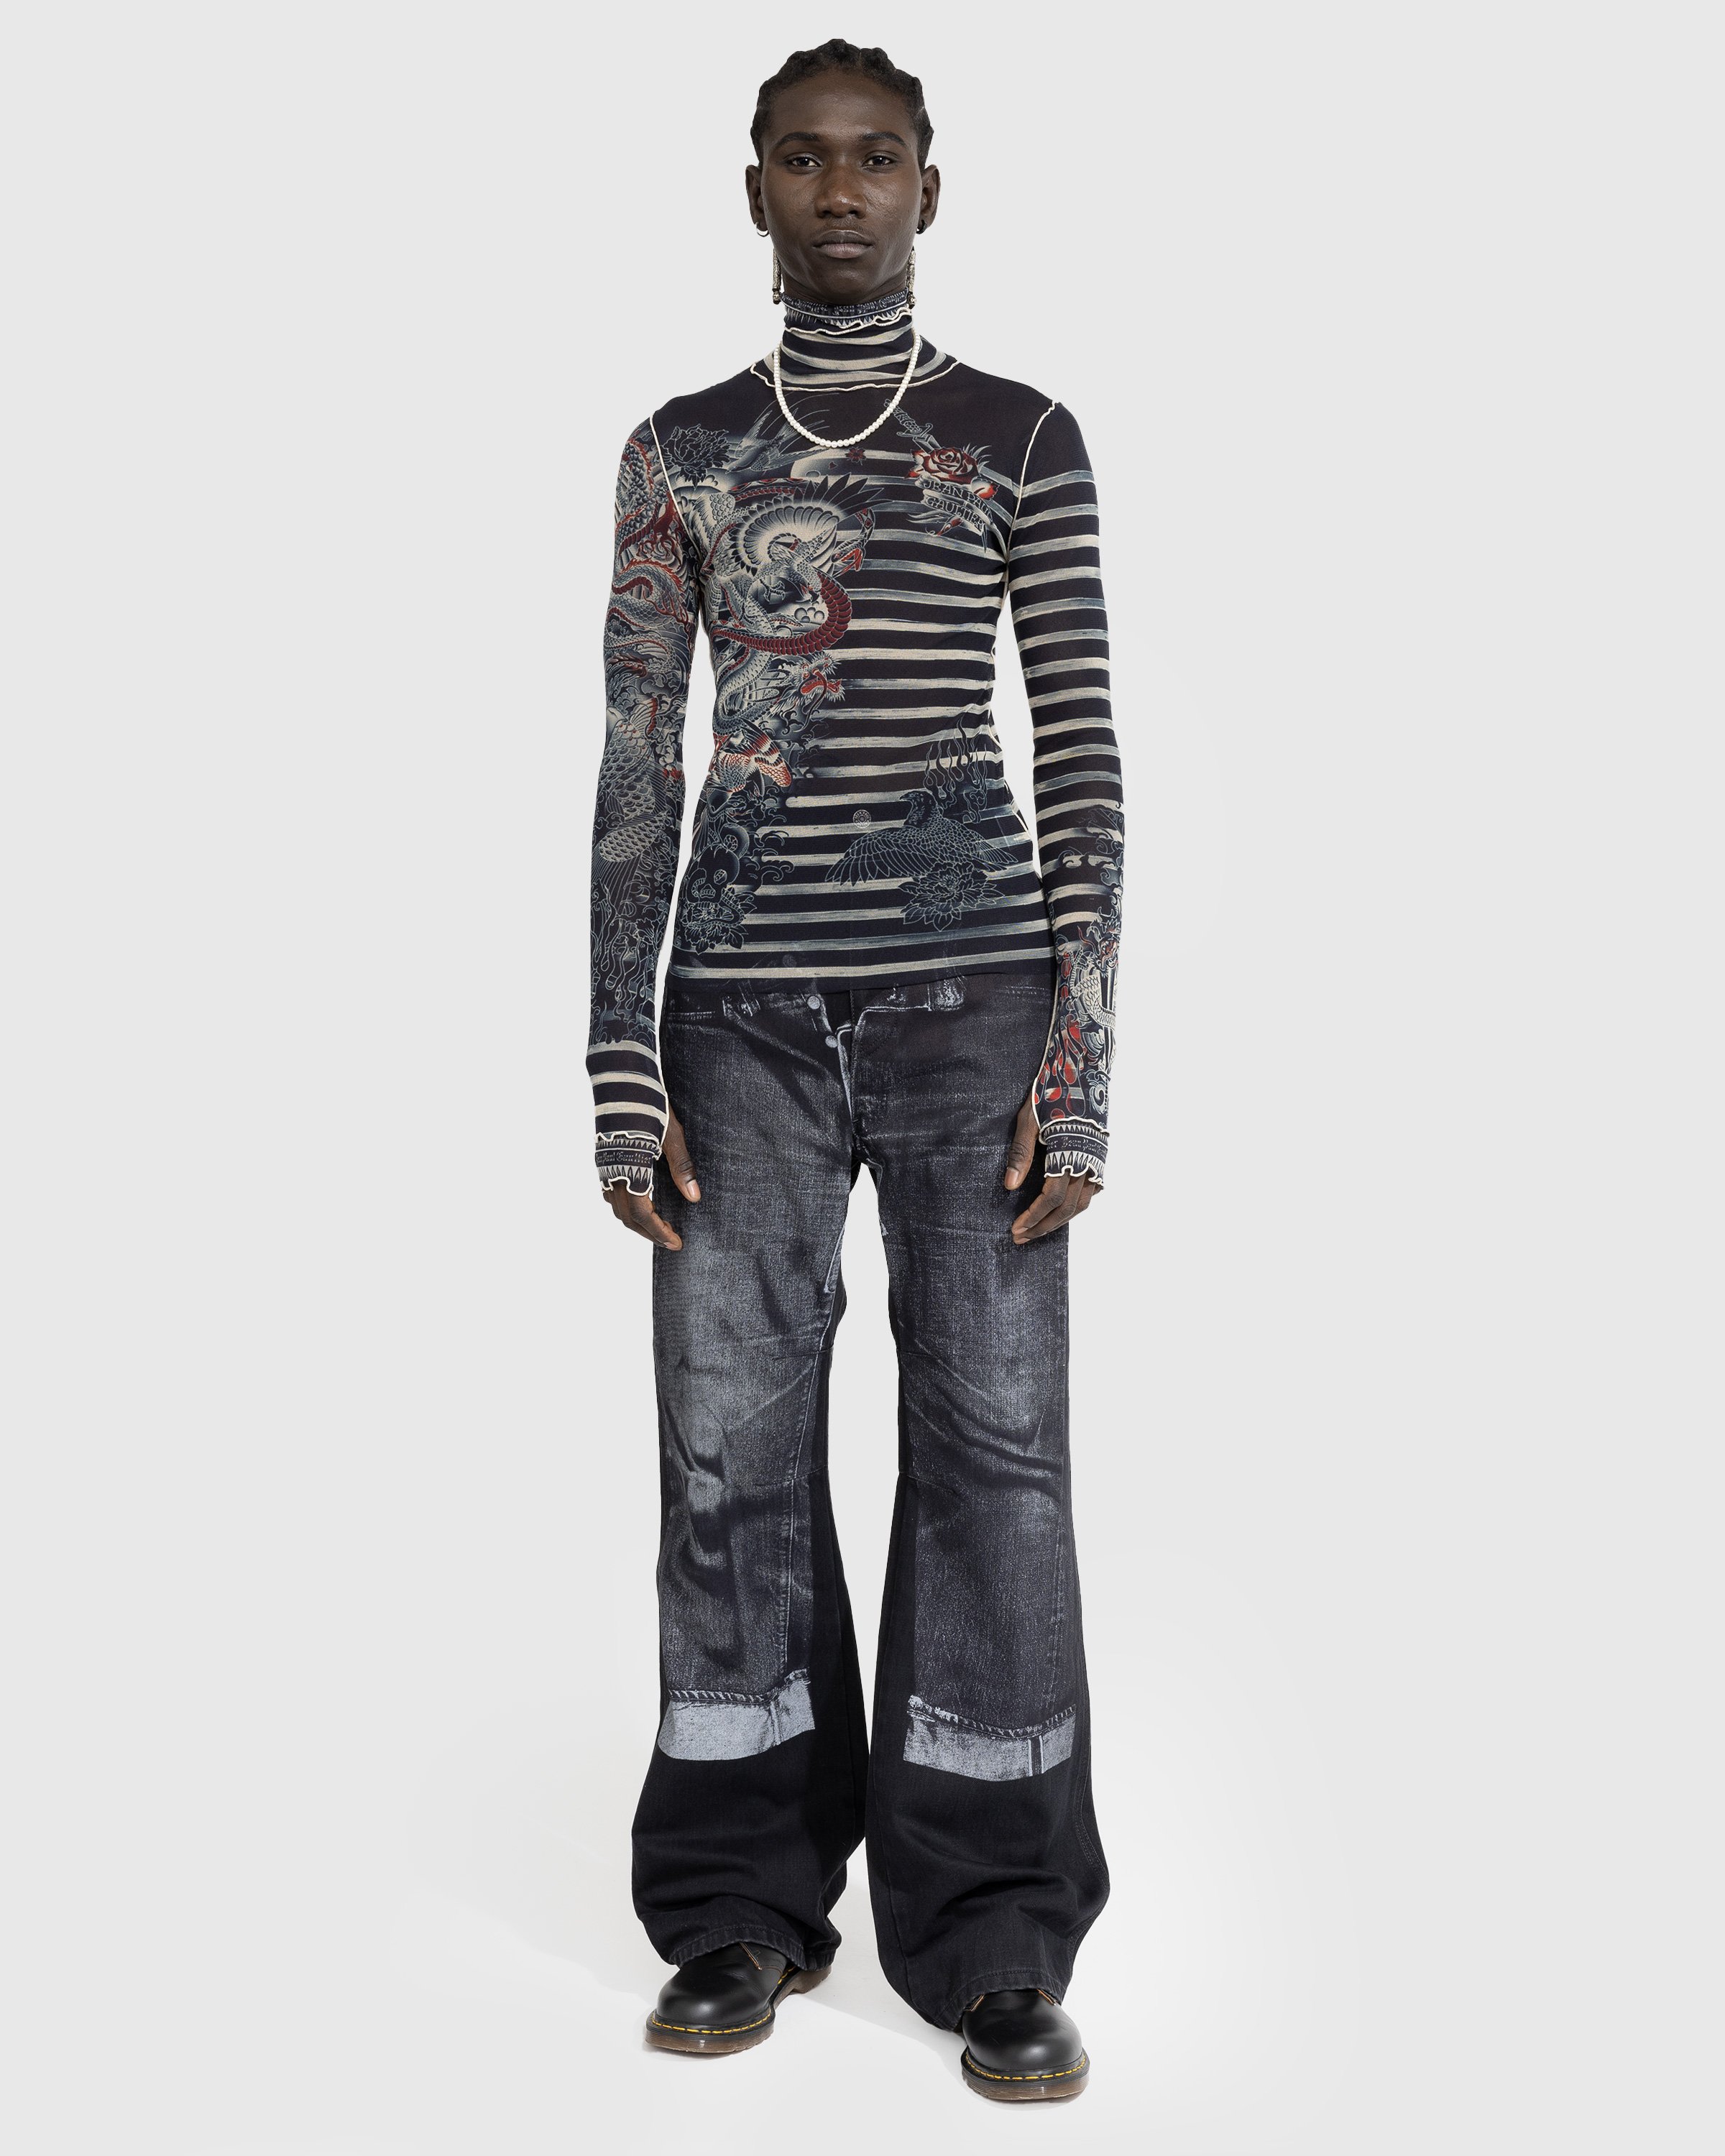 Jean Paul Gaultier - Denim Trompe L'oeil Jeans Black/Gray - Clothing - Black - Image 3